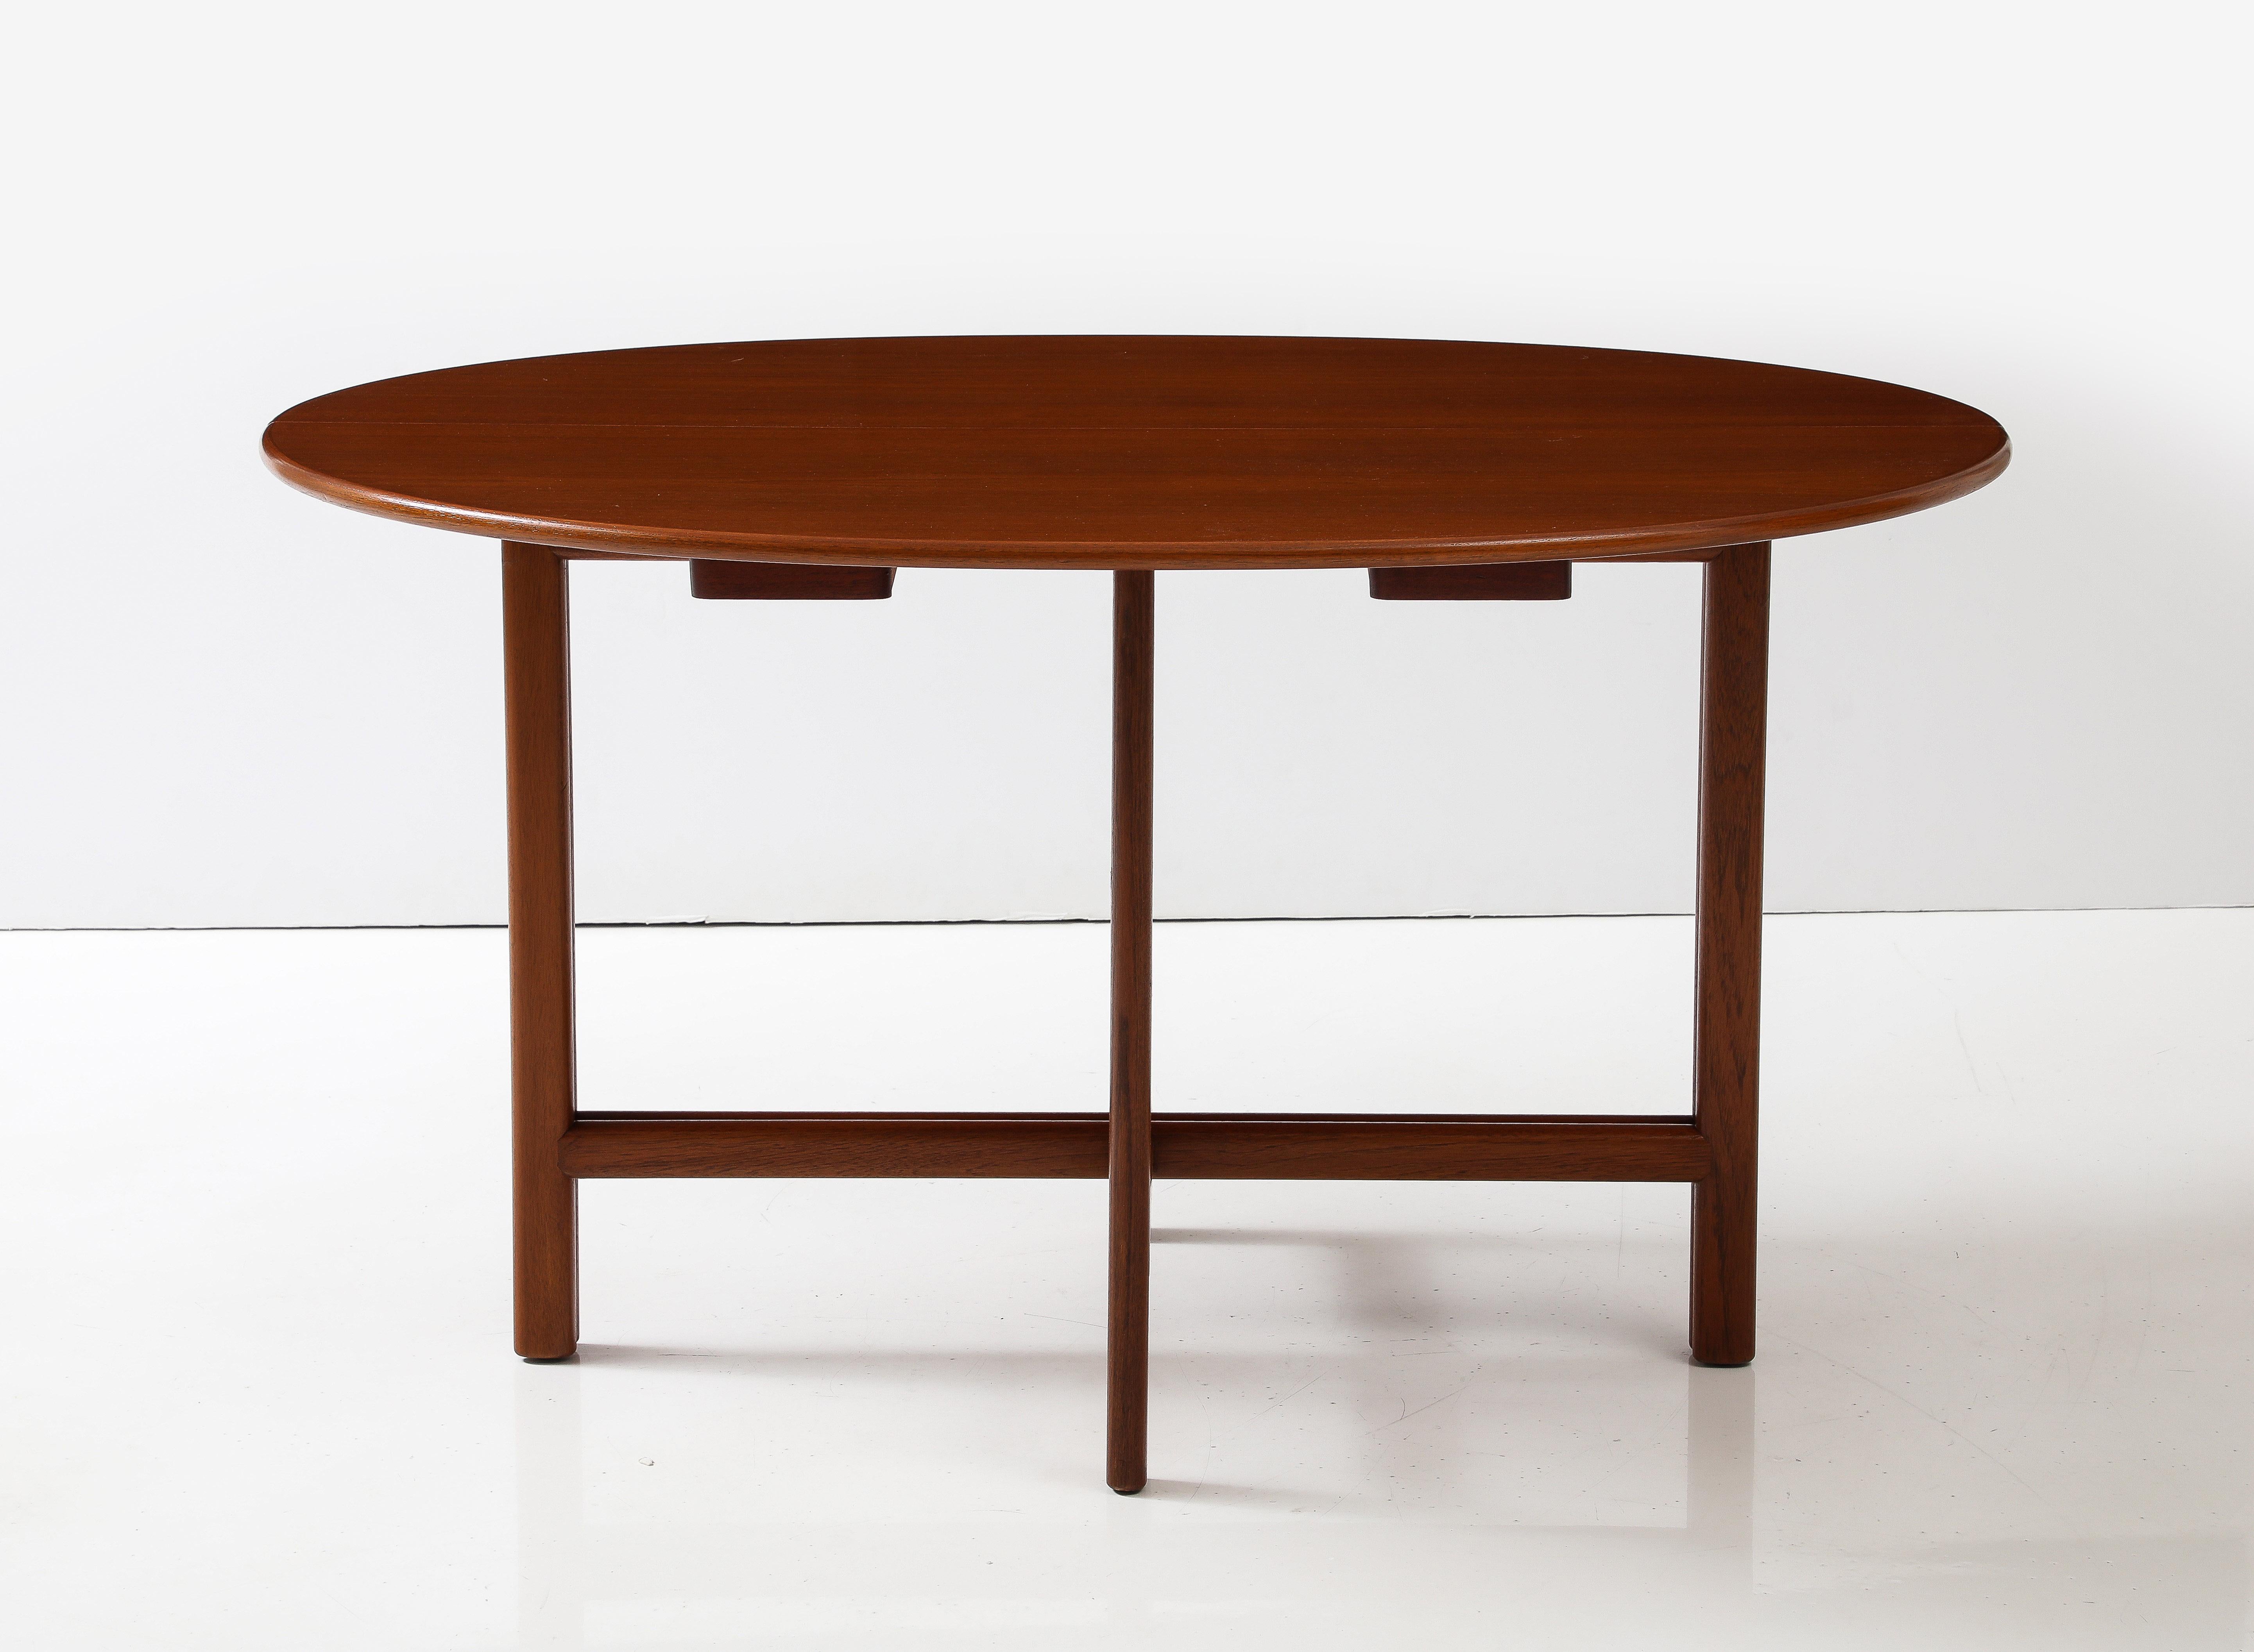 1960's Teak Dining Table Designed By Karl-Erik Ekselius For JOC With 3 Leaves 1